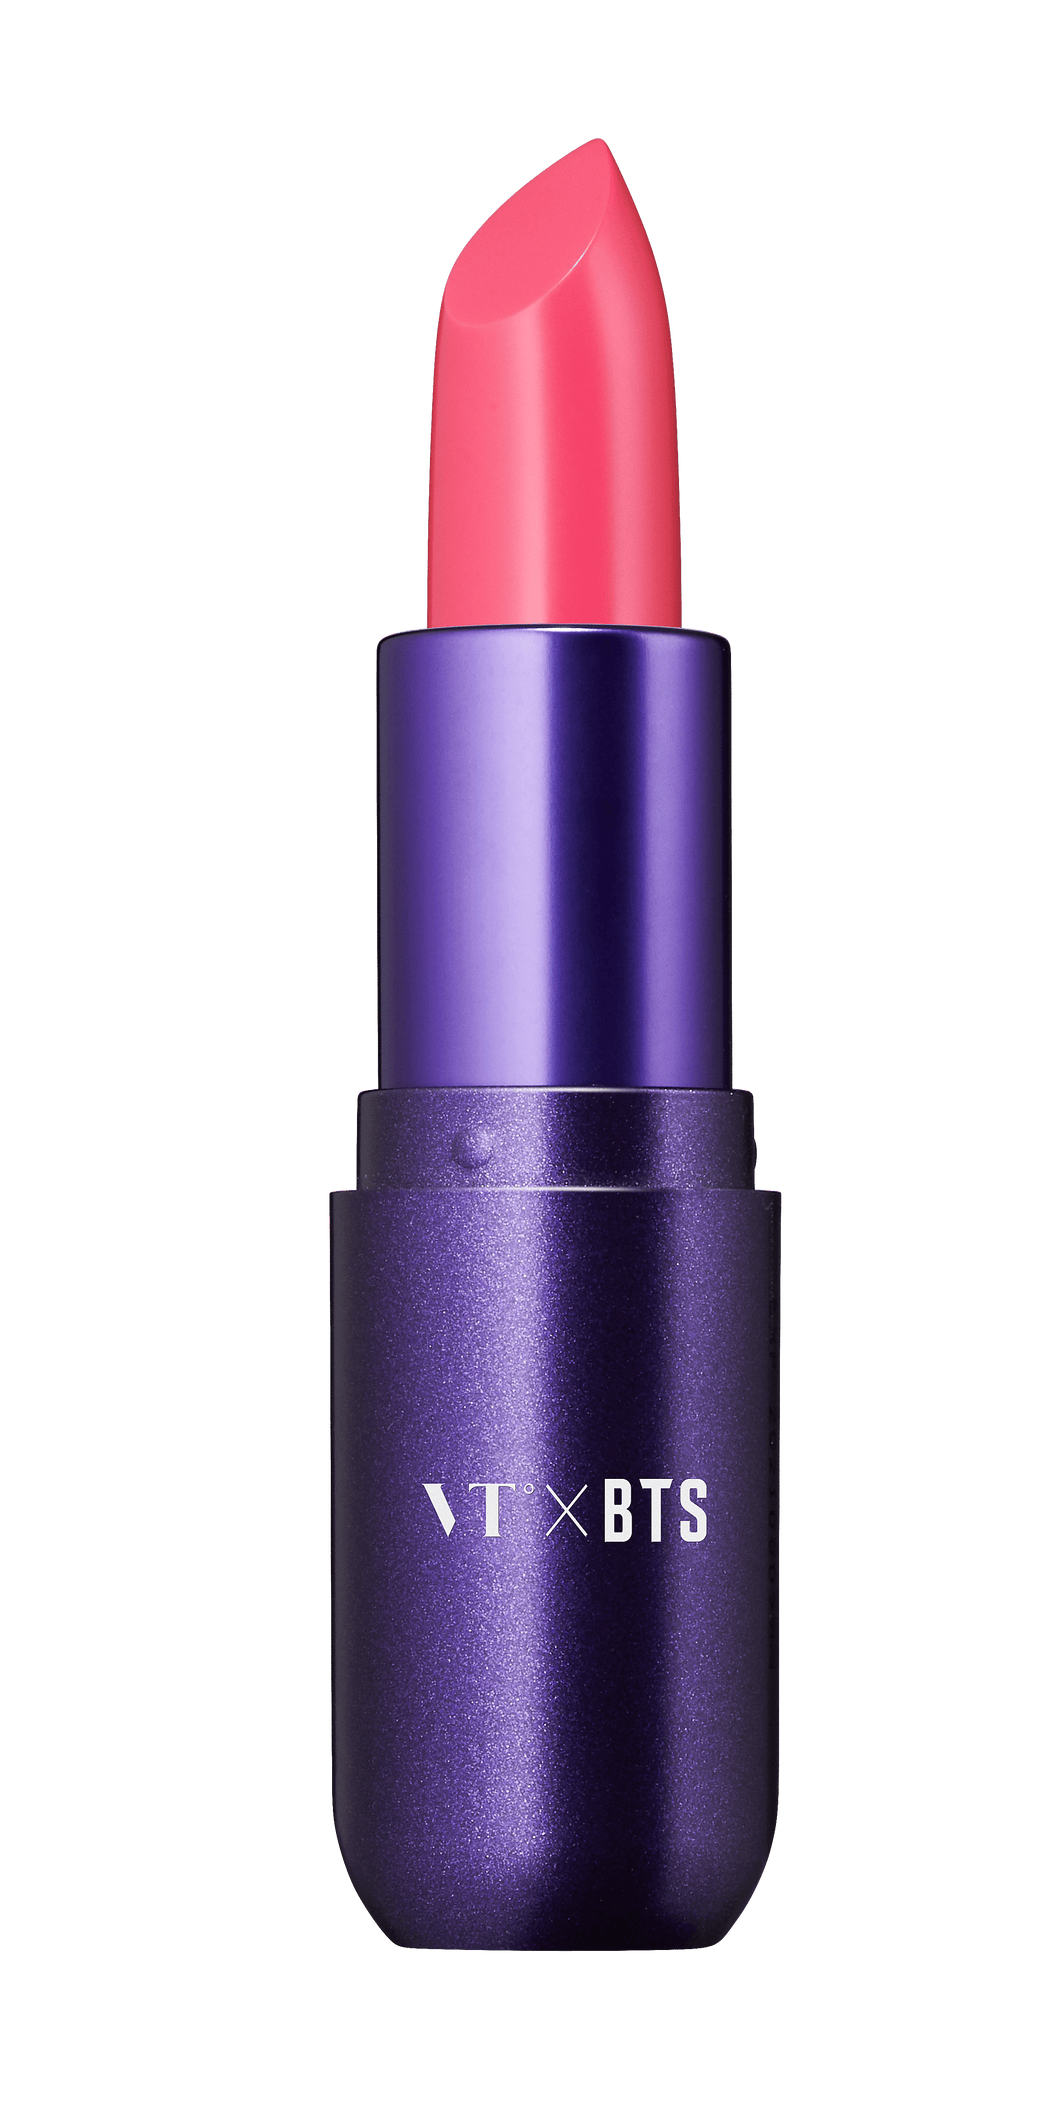 VT x BTS Glorious Gloria Lip Color Balm 02 Attraction